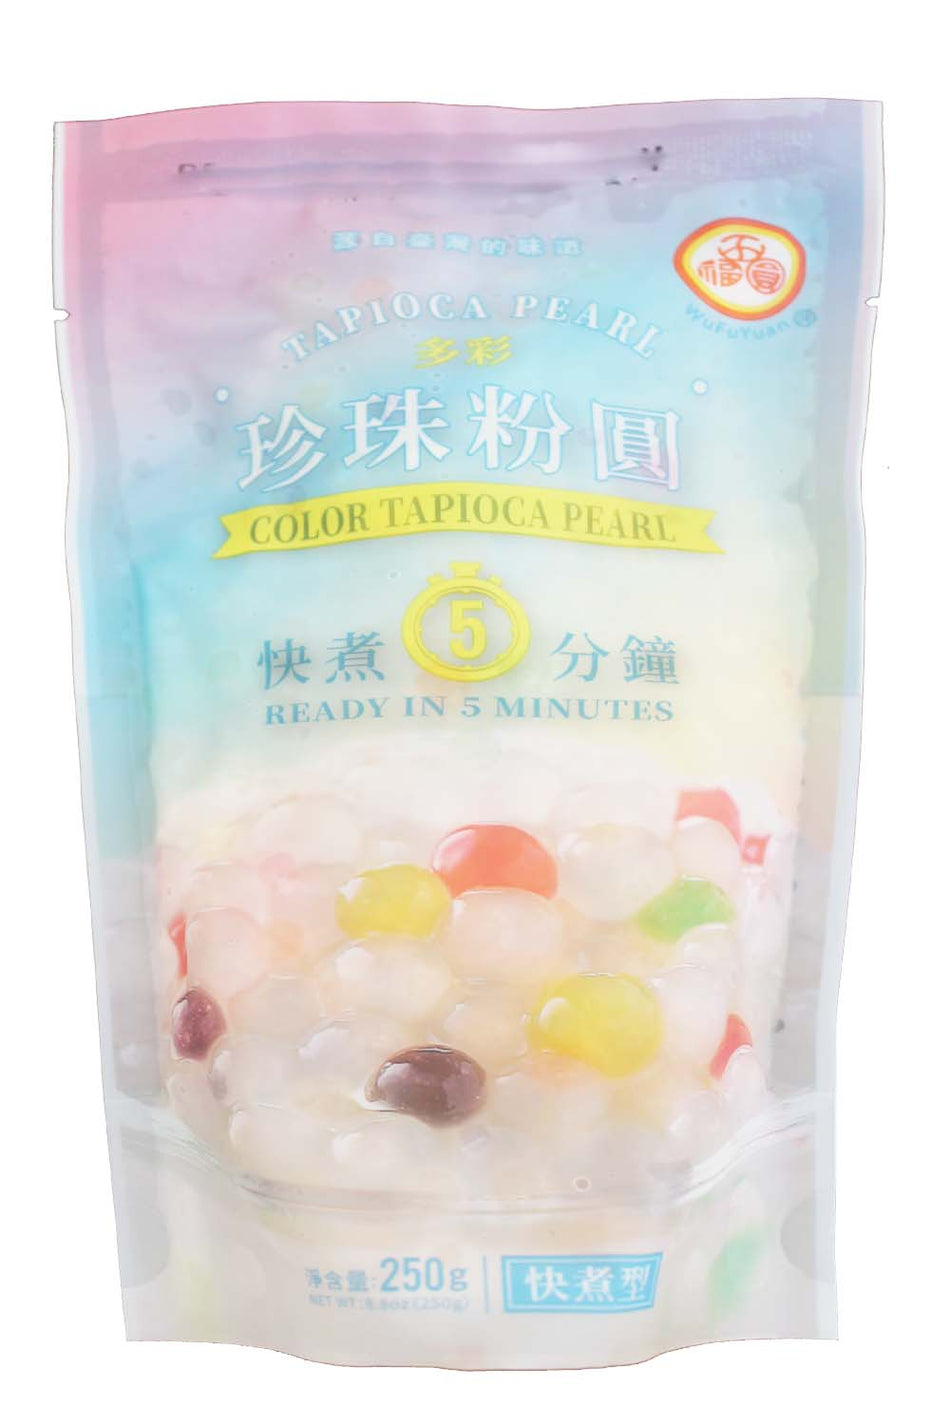 Wu Fu Yuan Color Tapioca Pearl